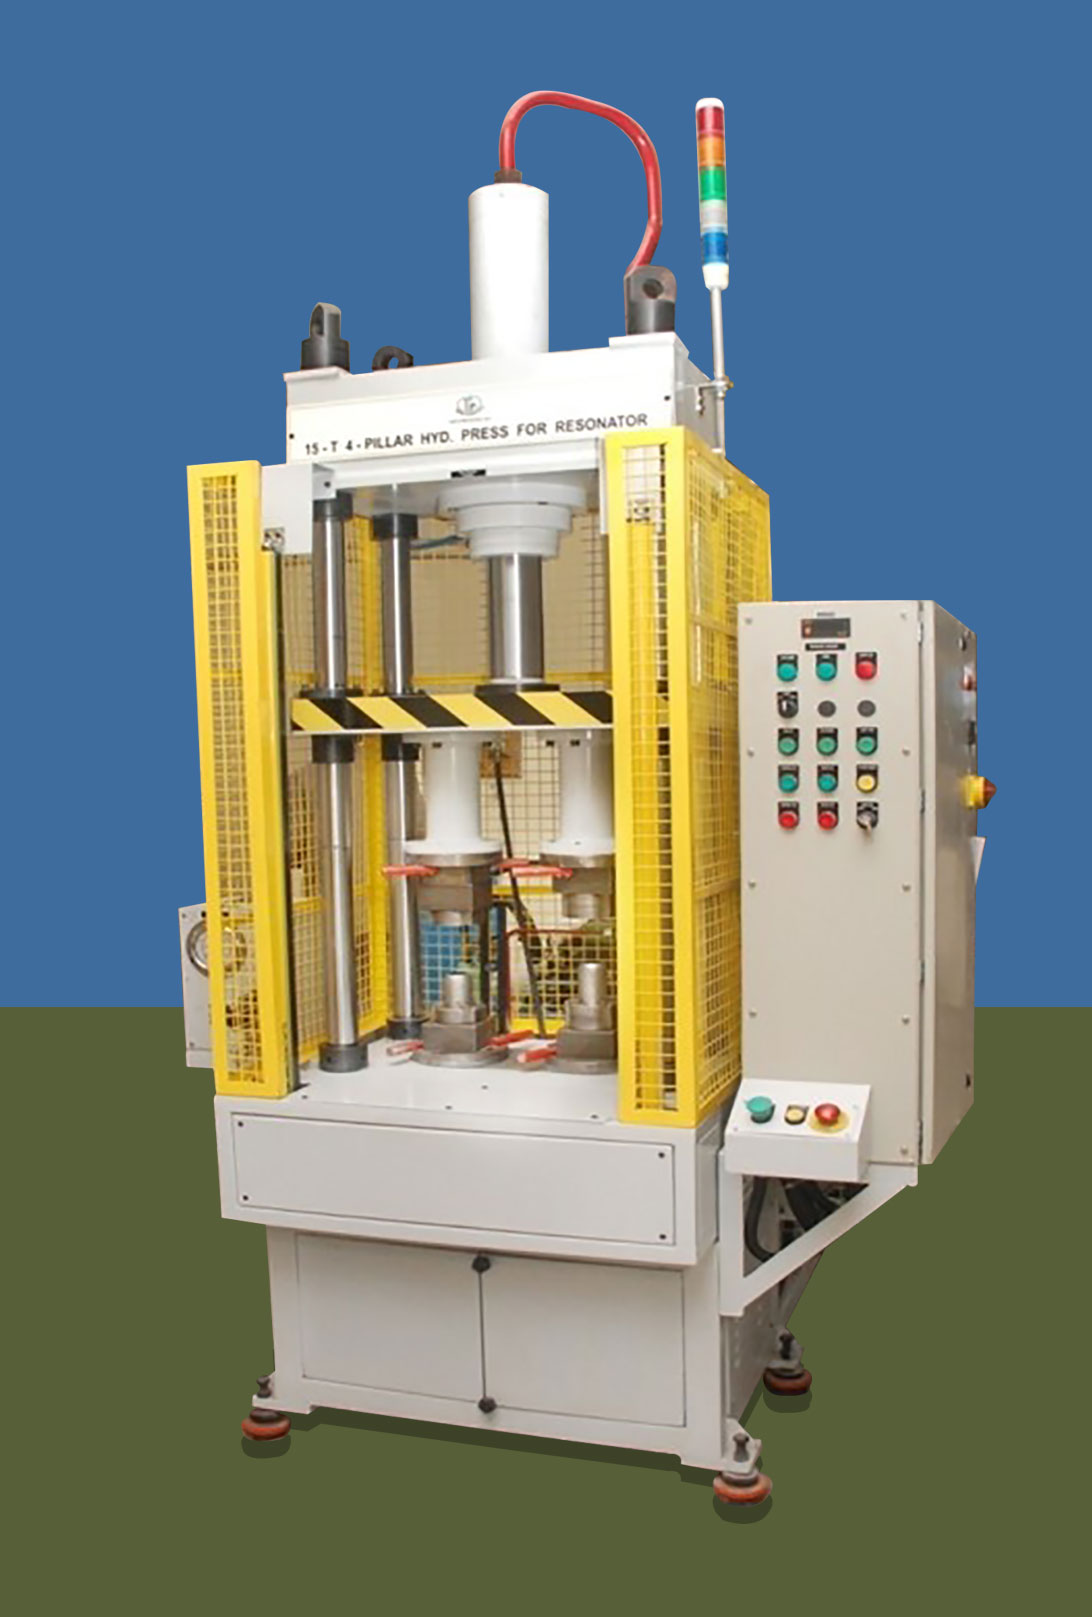 15-T 4-Piller Hydraulic Press For Resonator